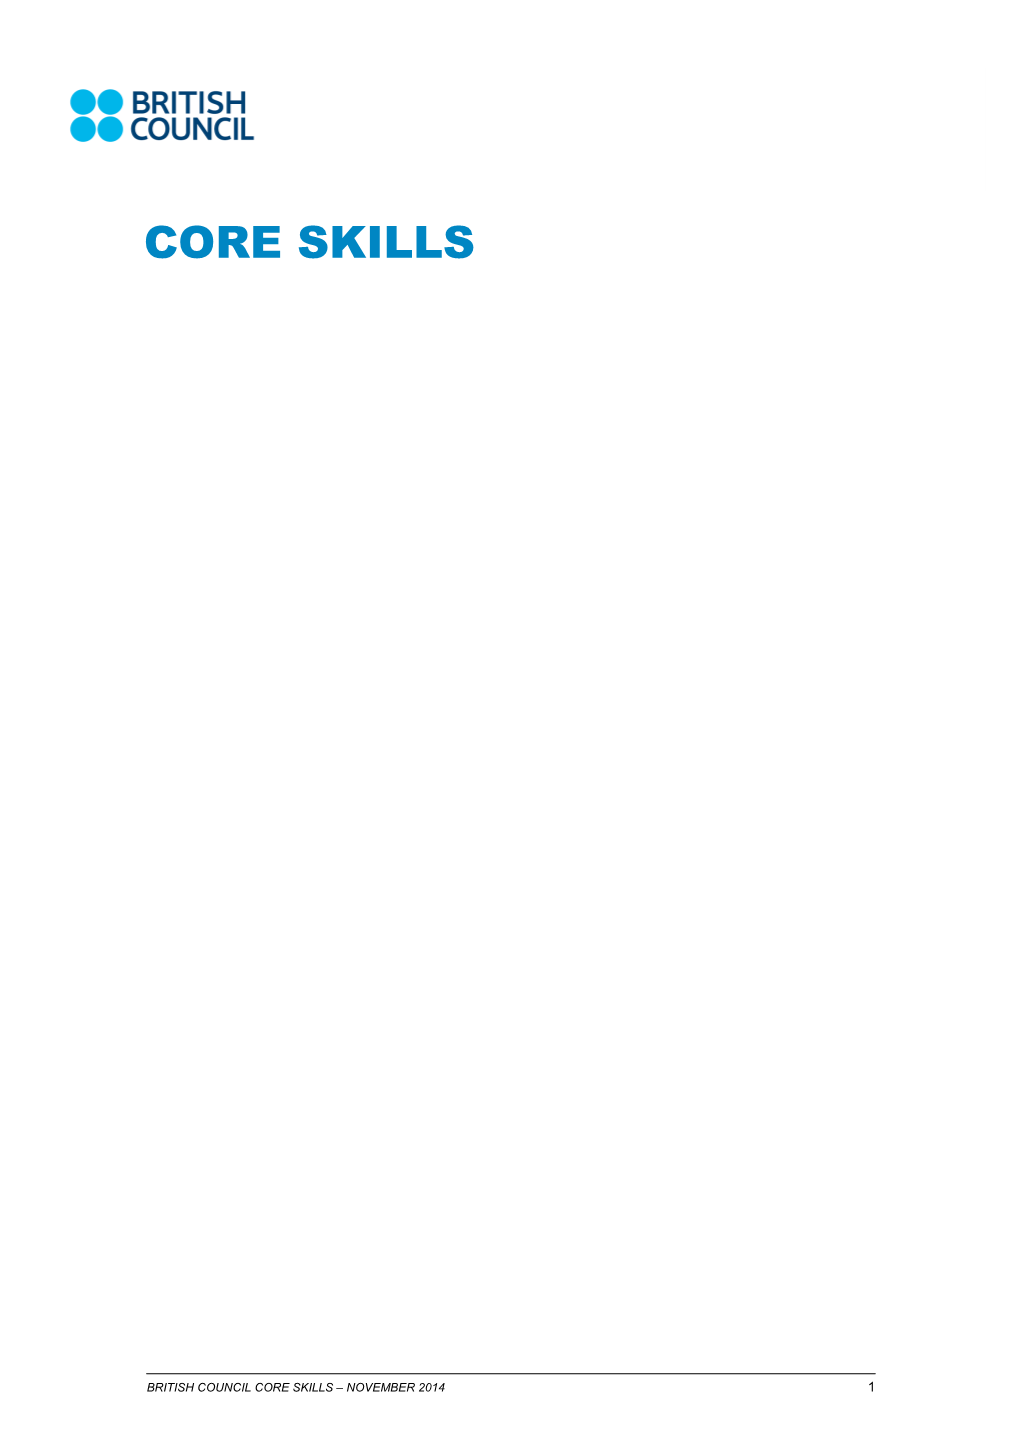 Core Skills FINAL